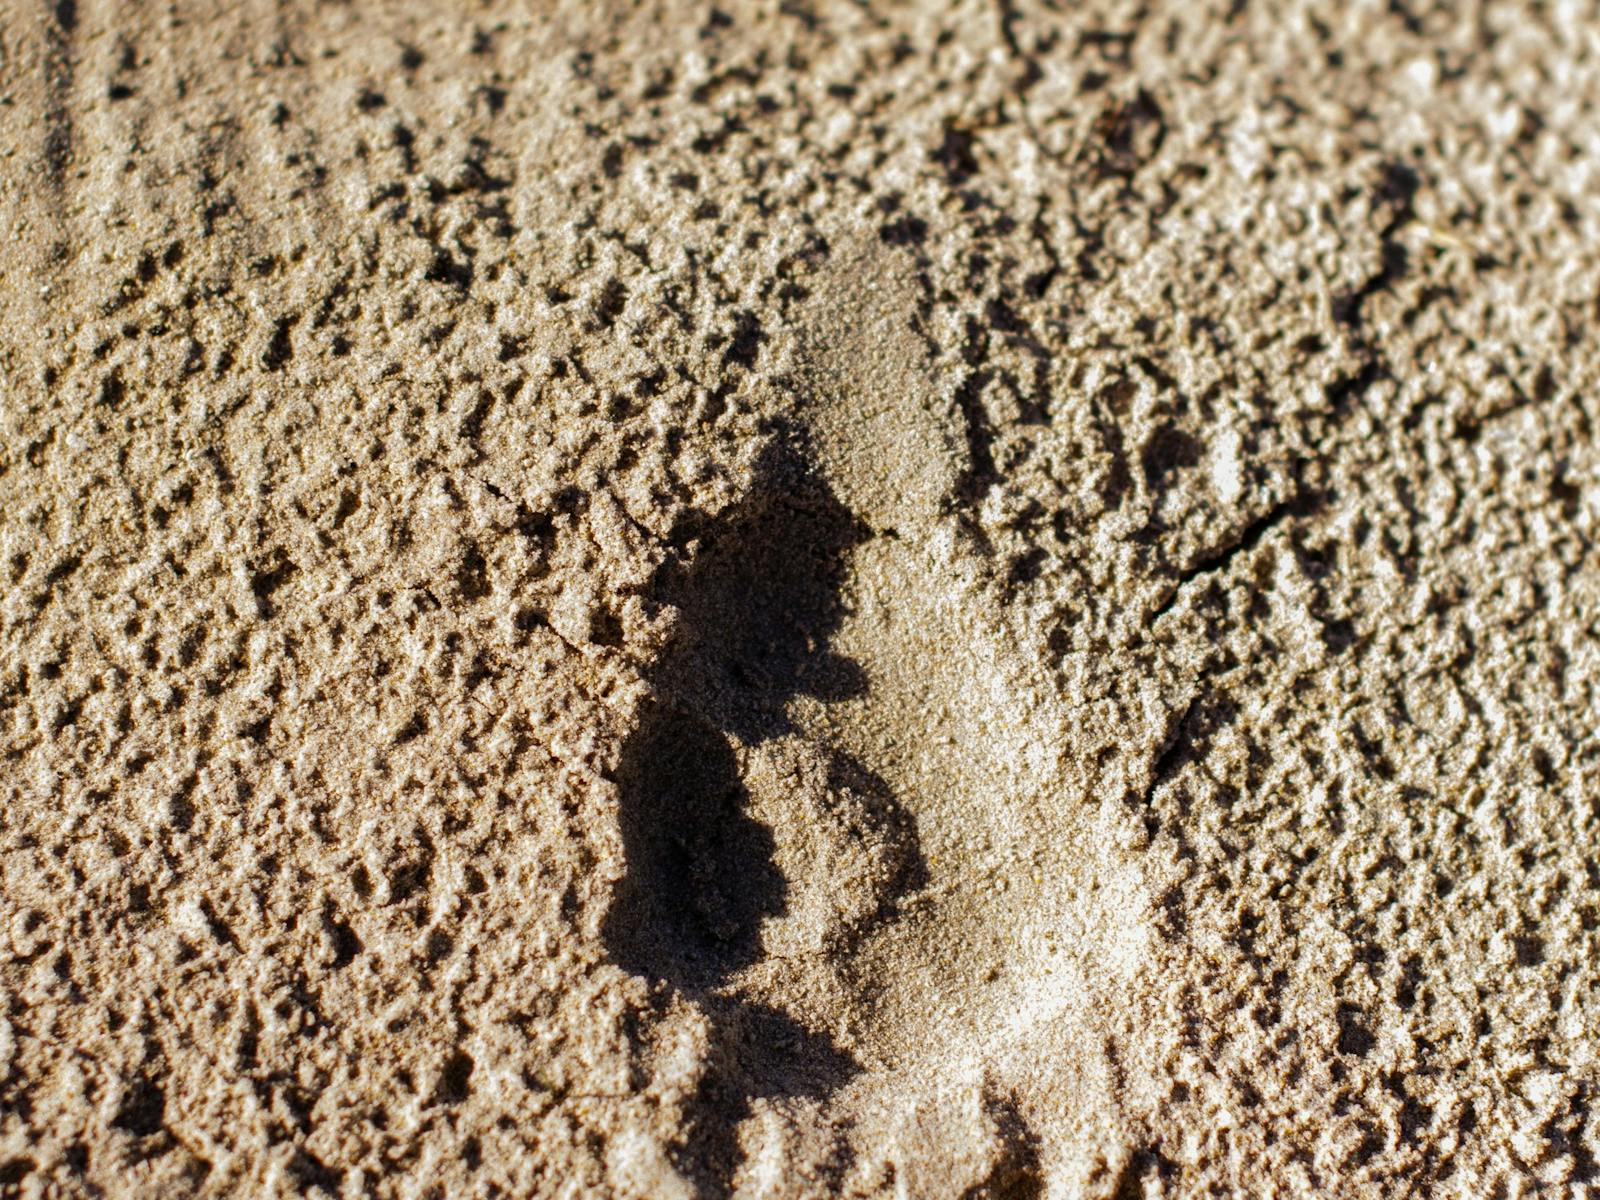 Wombat tracks left in sand